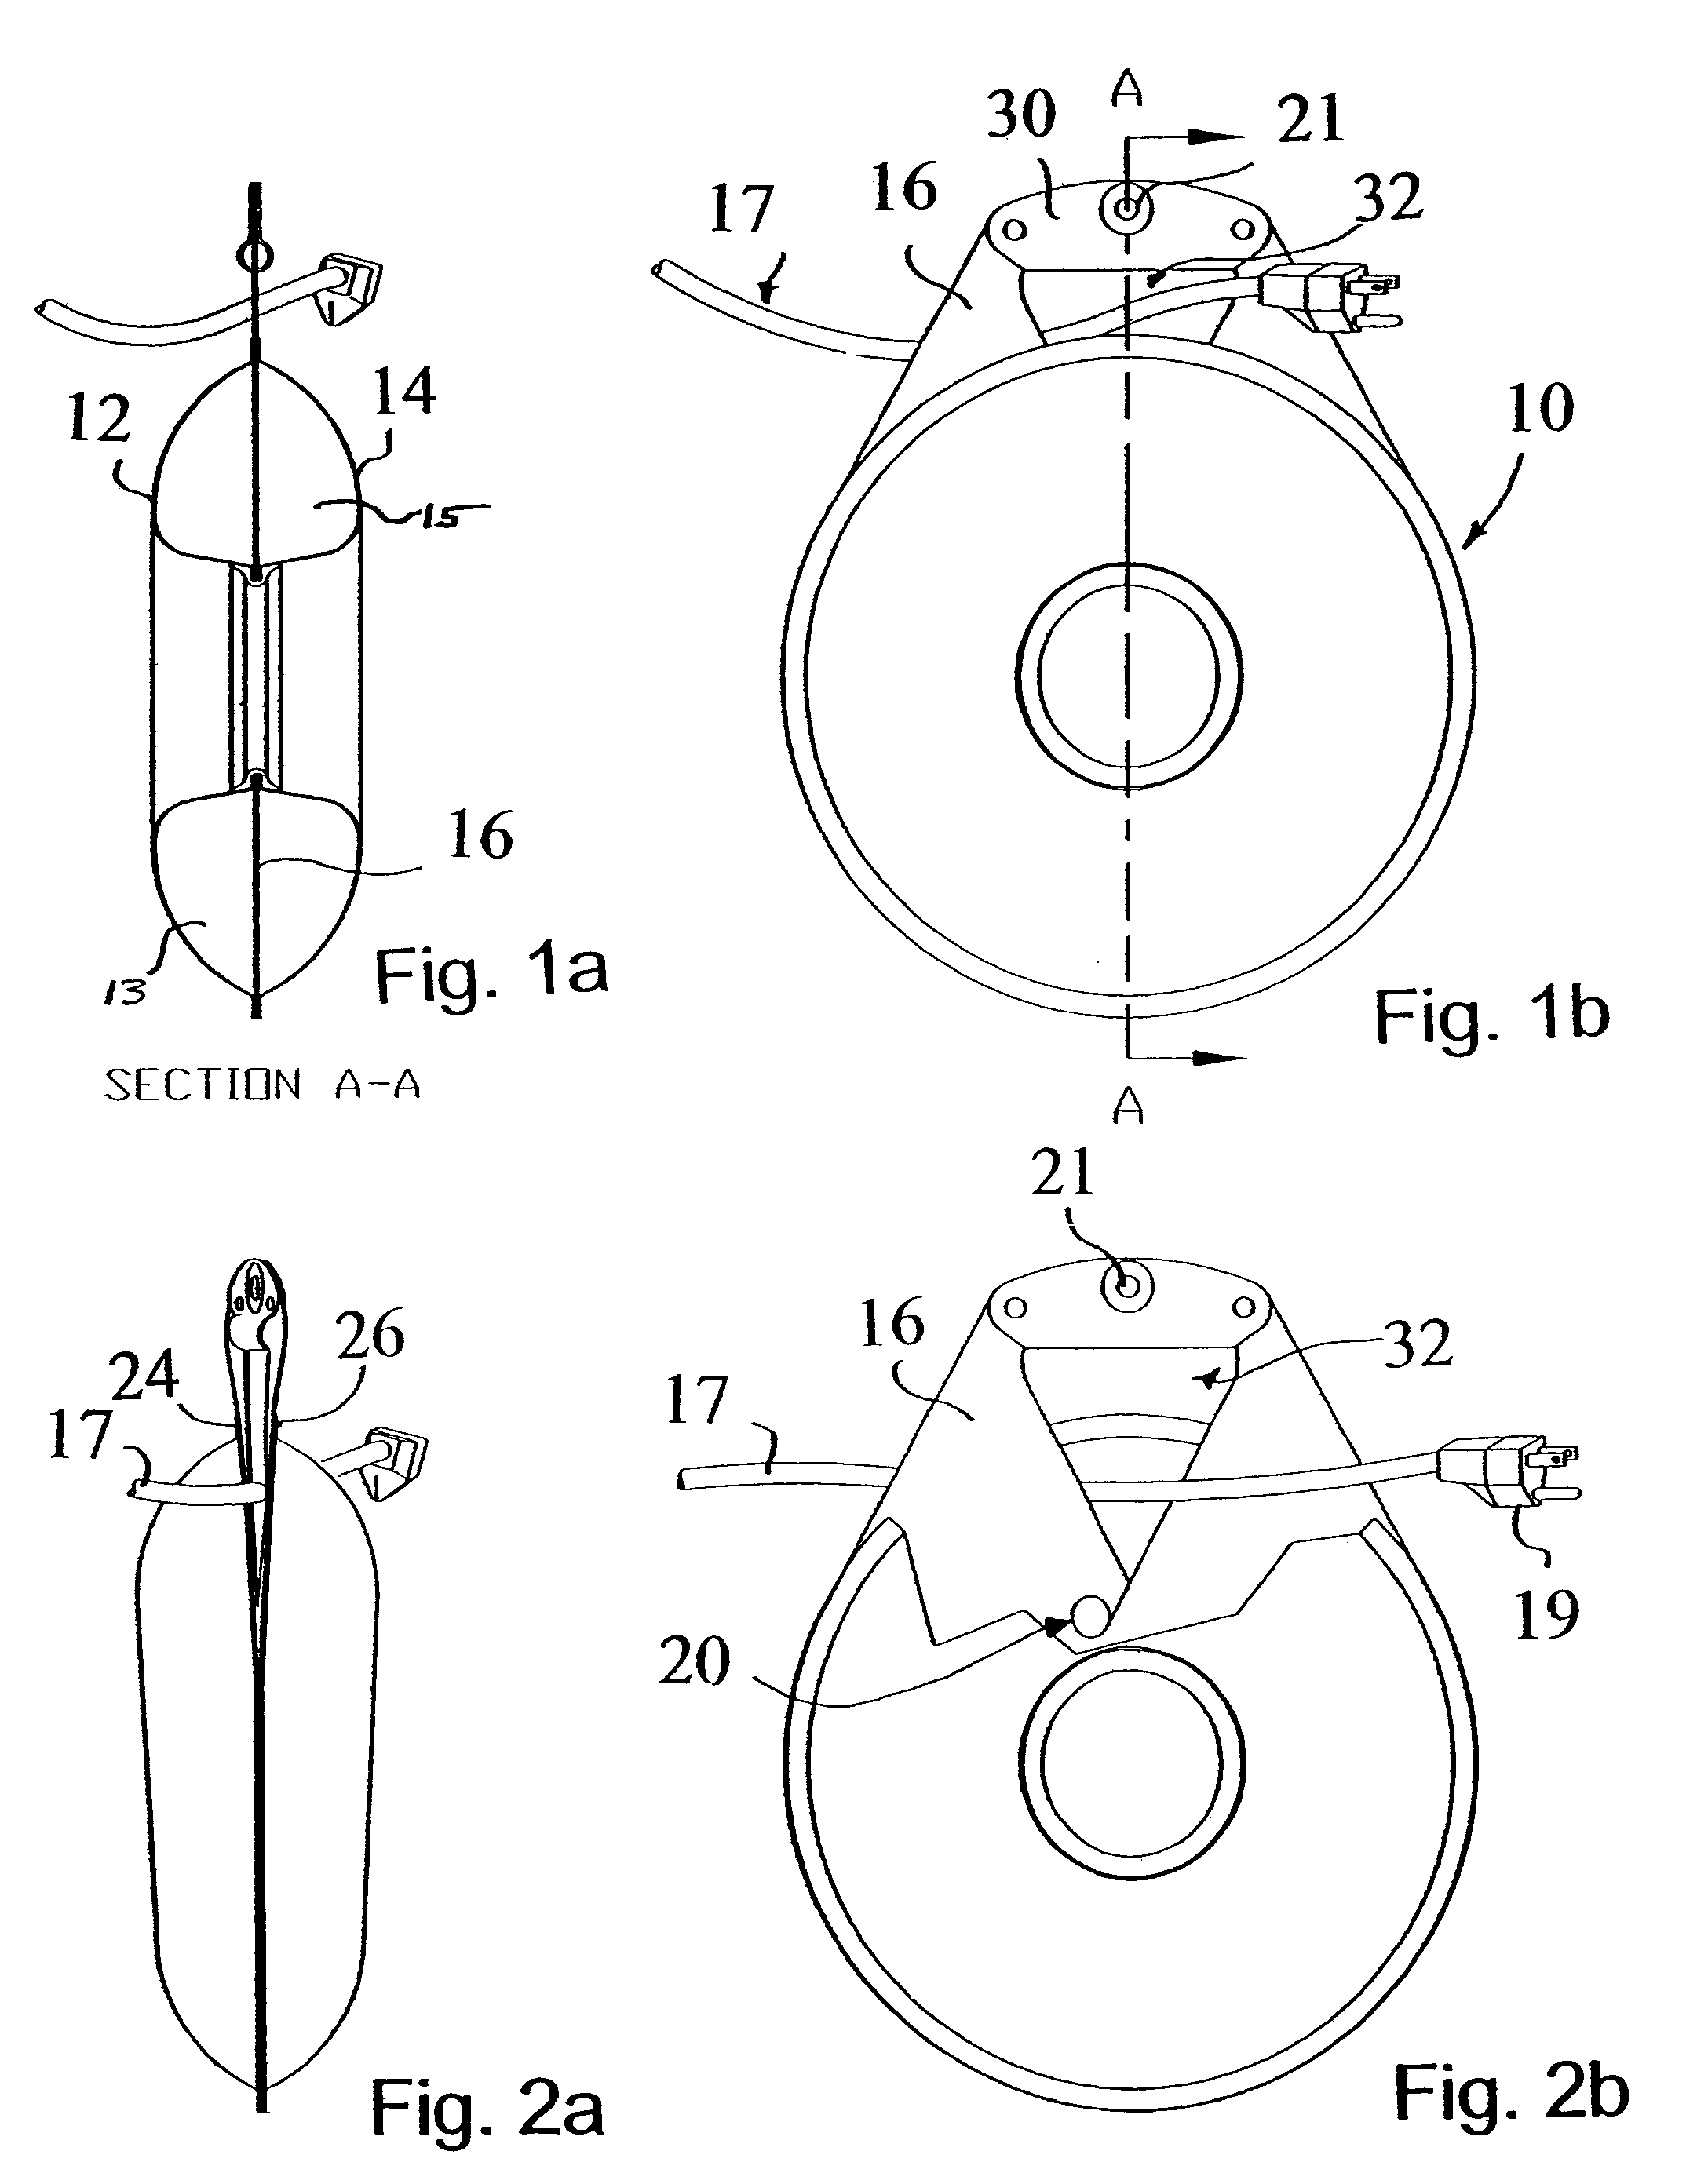 Cord holder apparatus